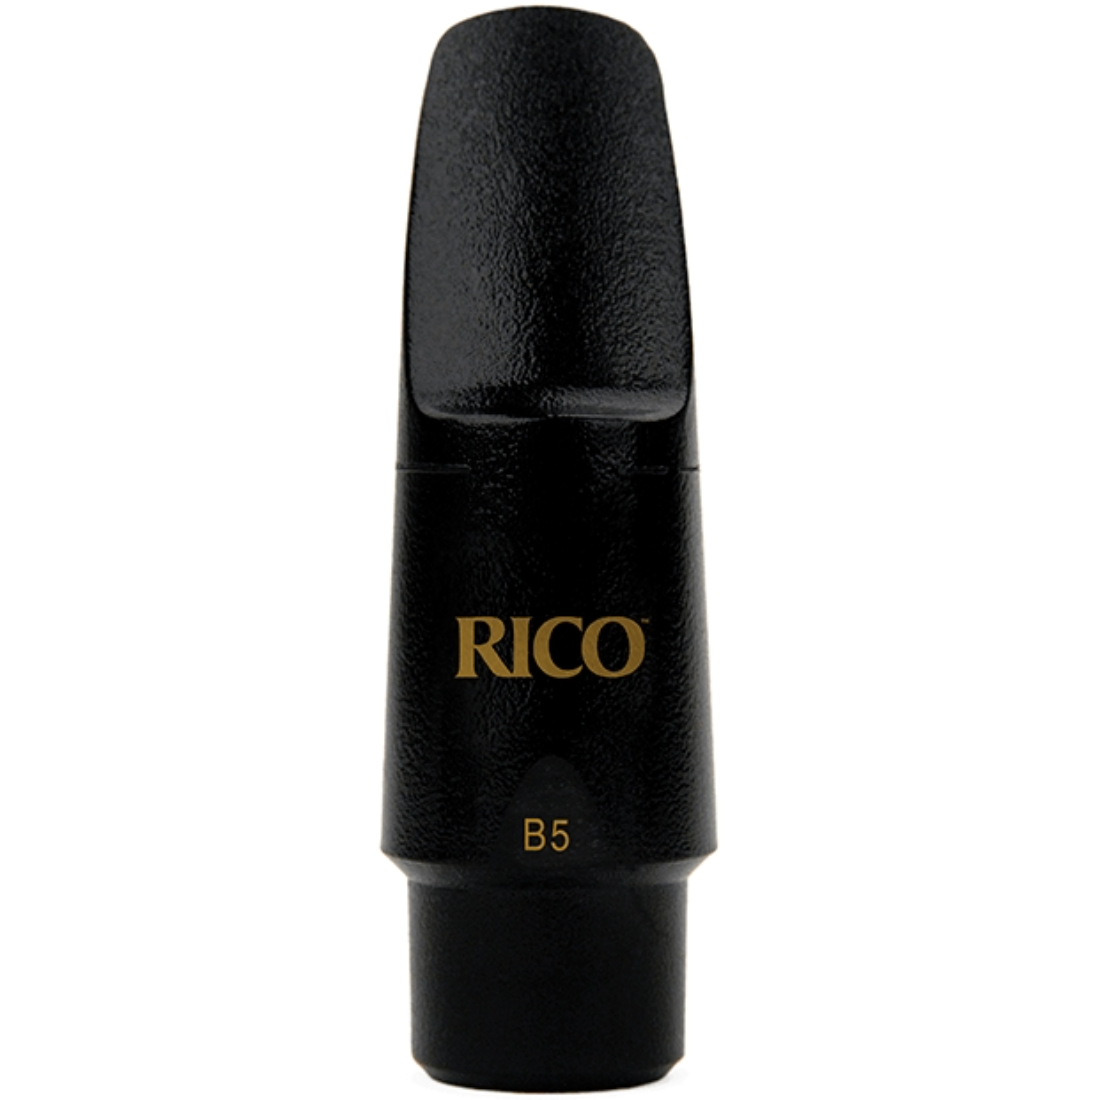 Black RICO soprano saxophone mouthpiece